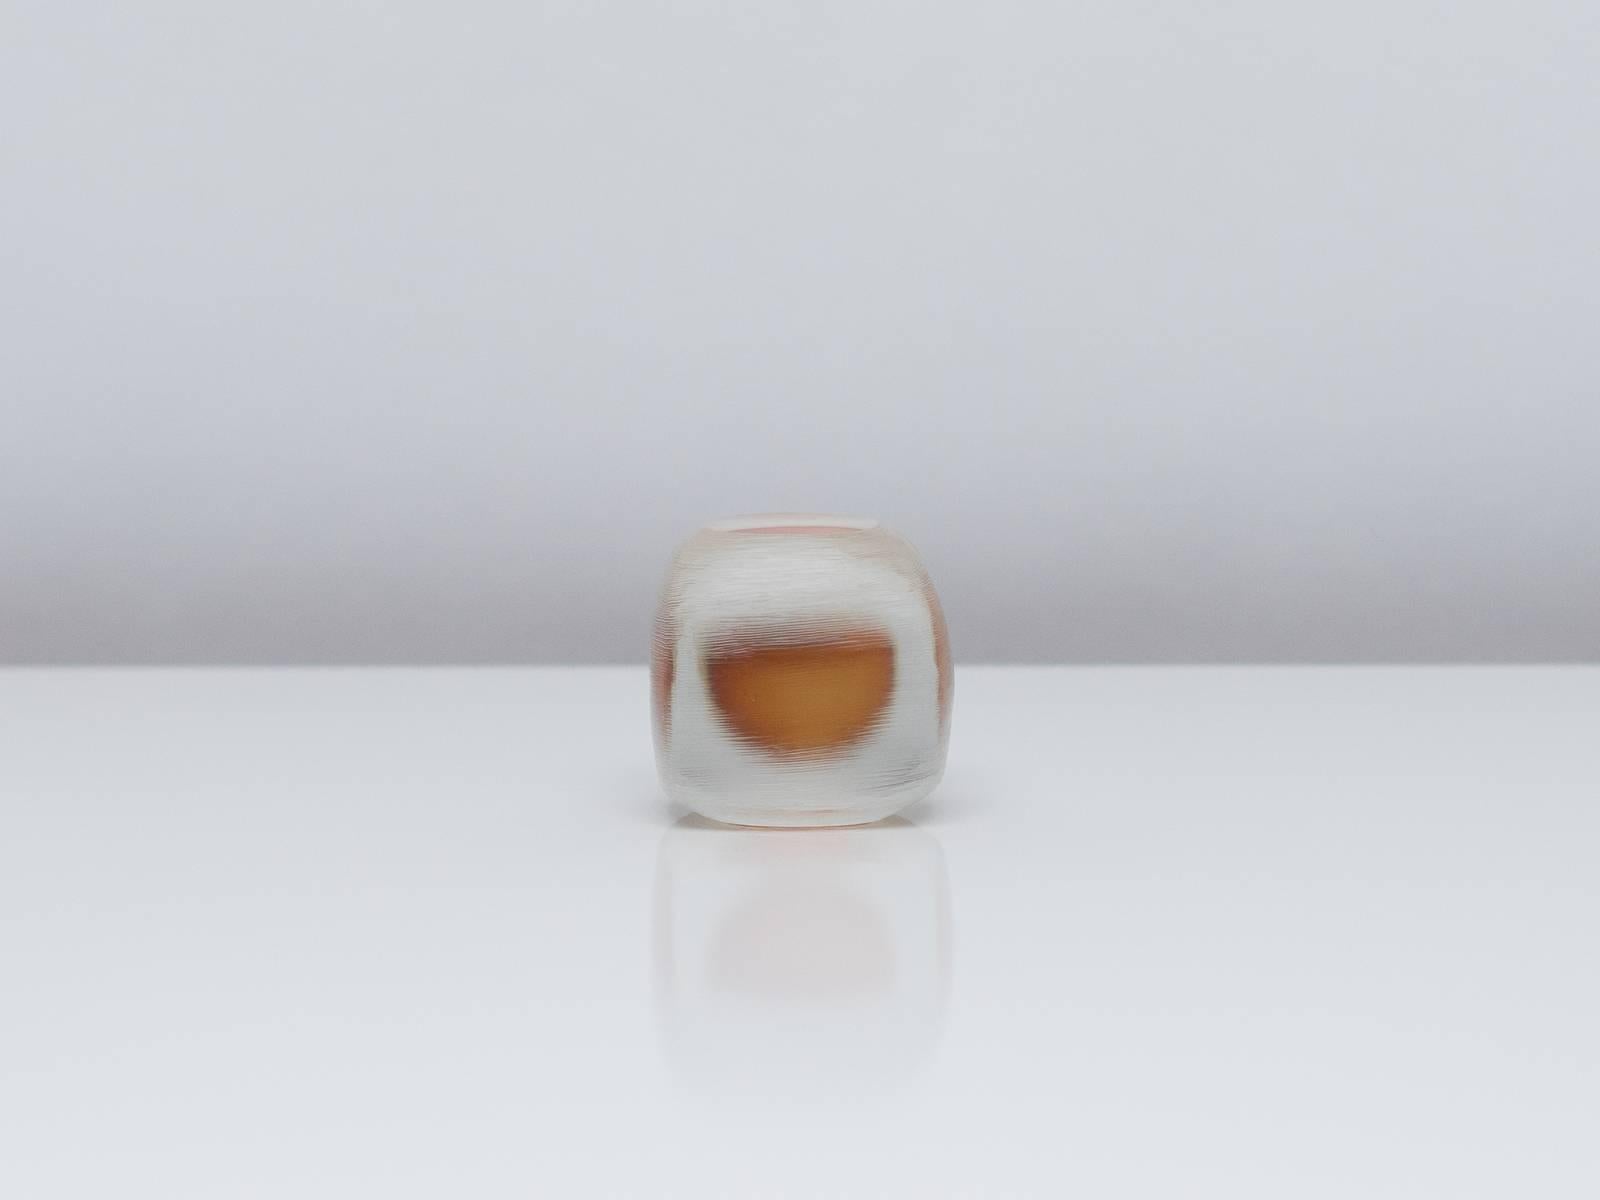 Modern Venini Vetro Sommerso Incised Murano Glass Paperweight with Orange Core, 1968